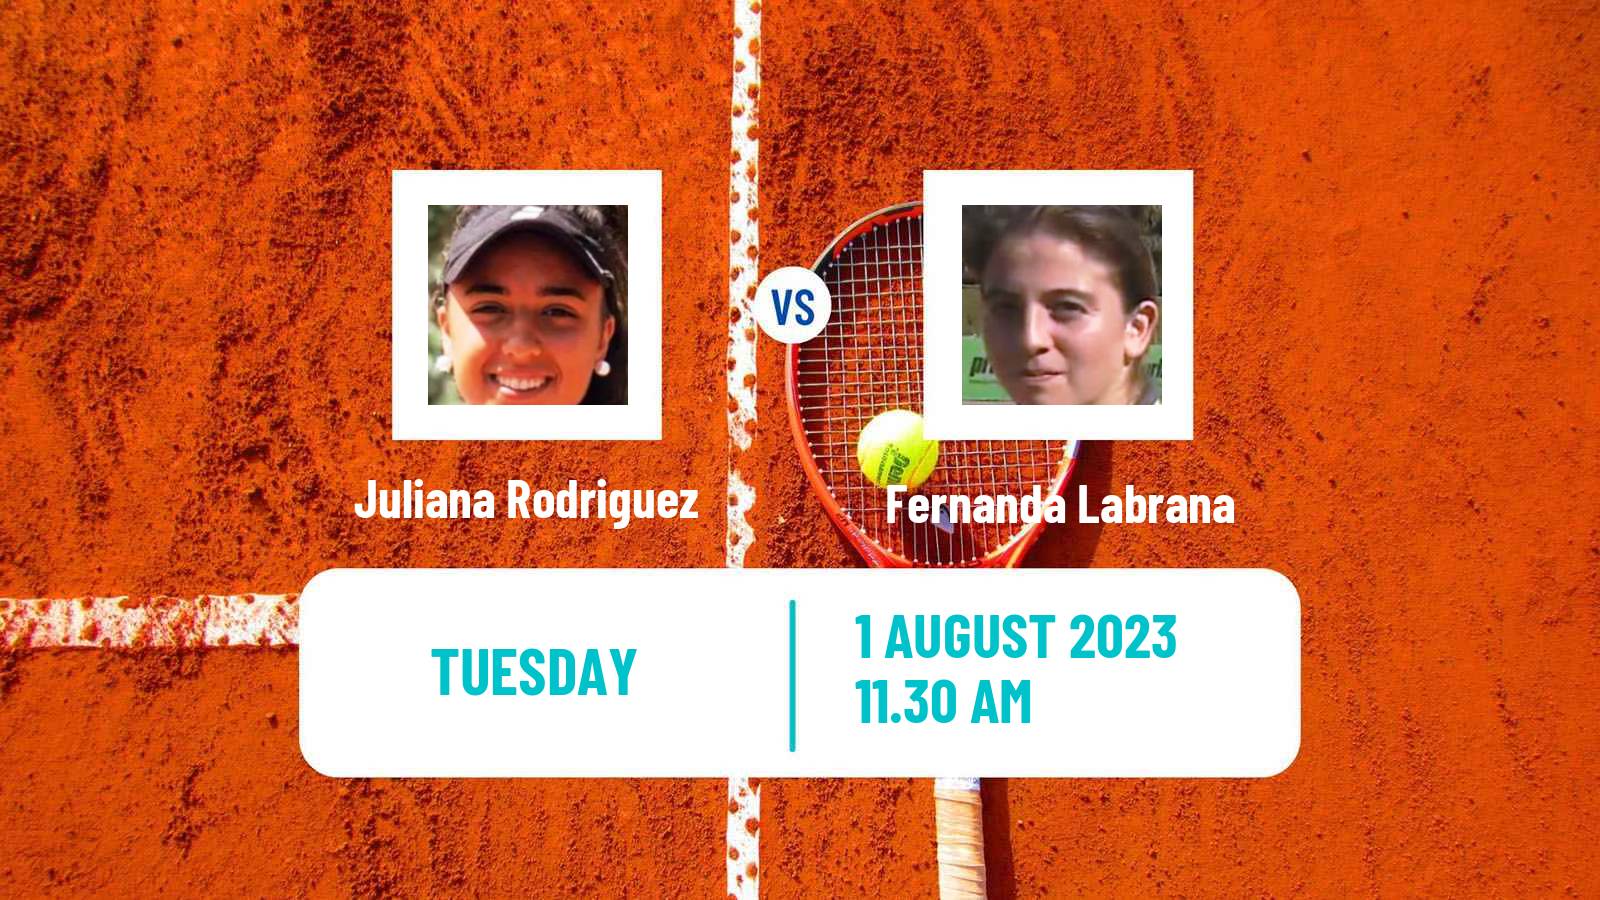 Tennis ITF W25 Junin Women Juliana Rodriguez - Fernanda Labrana